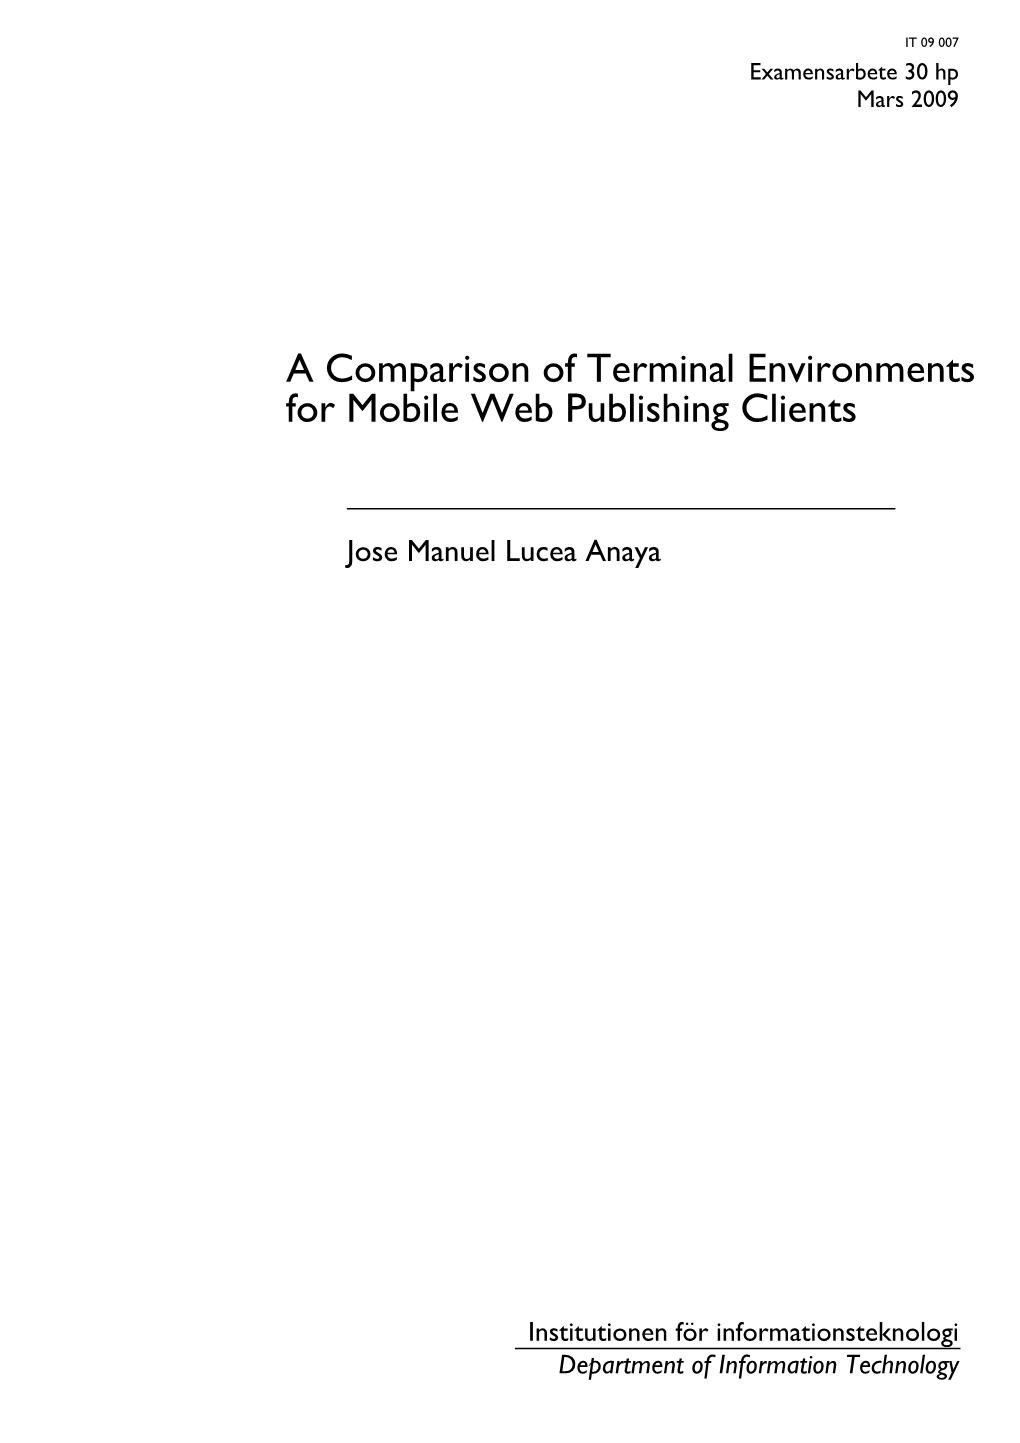 A Comparison of Terminal Environments for Mobile Web Publishing Clients